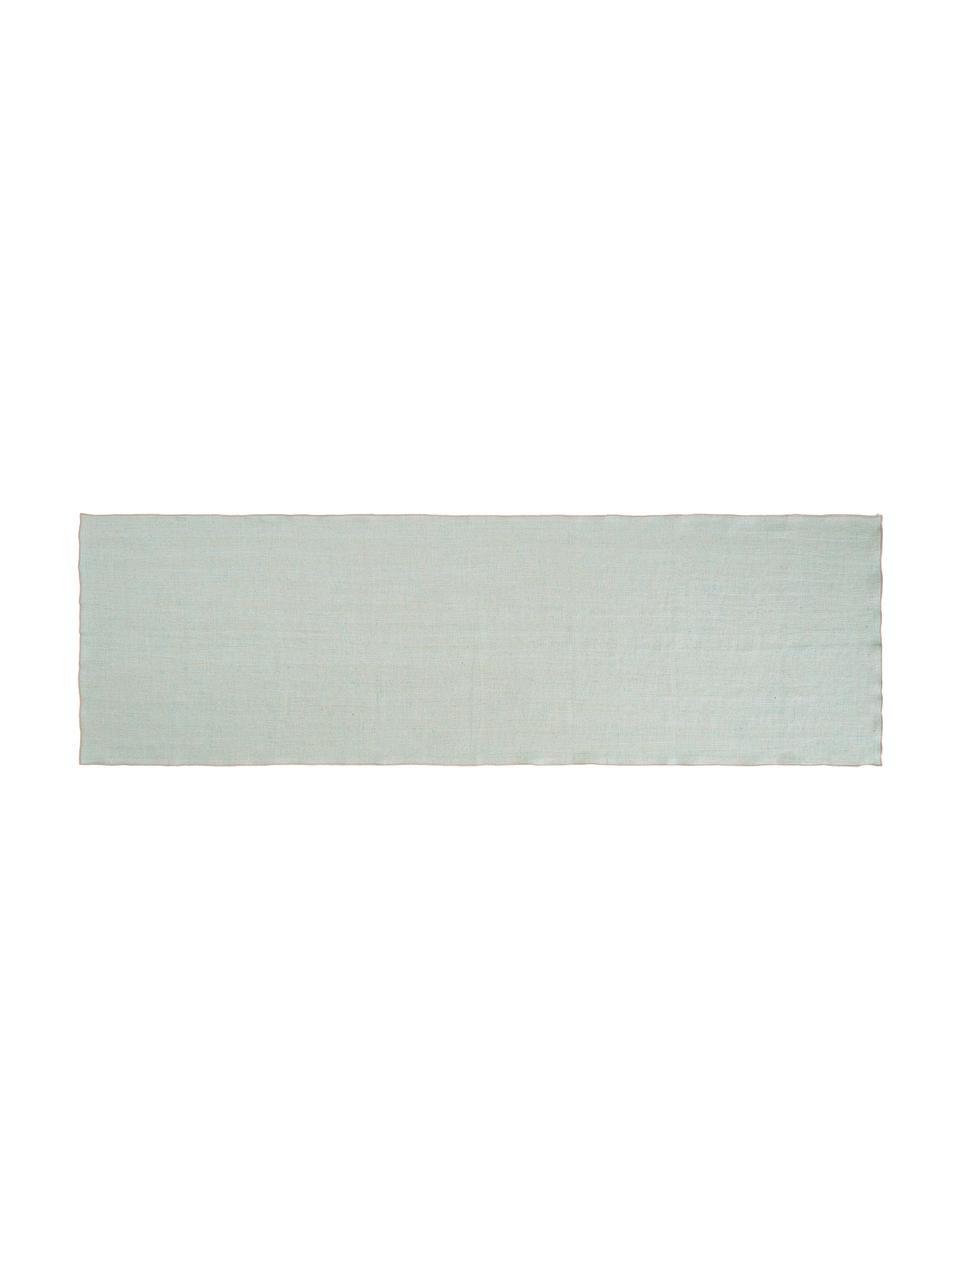 Linnen tafelloper Audra met visgraatpatroon, 100% linnen, Groen, grijs, B 46 x L 147 cm